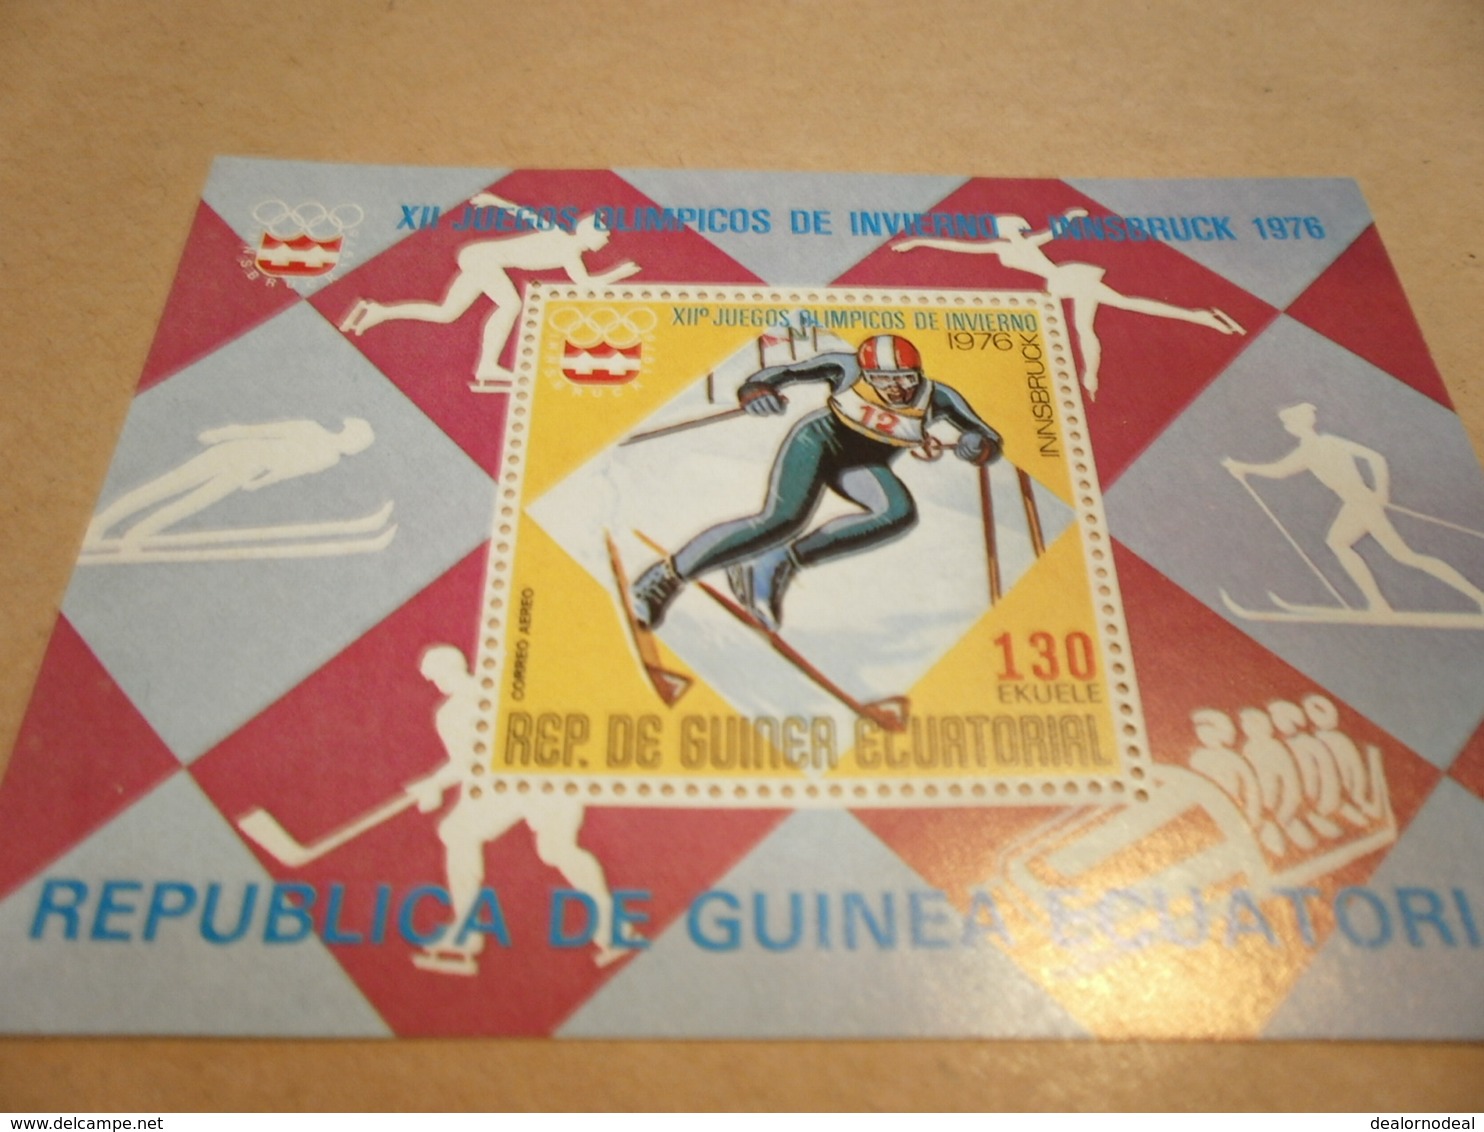 Miniature Sheet 1976 Winter Olympics - Guinea Ecuatorial